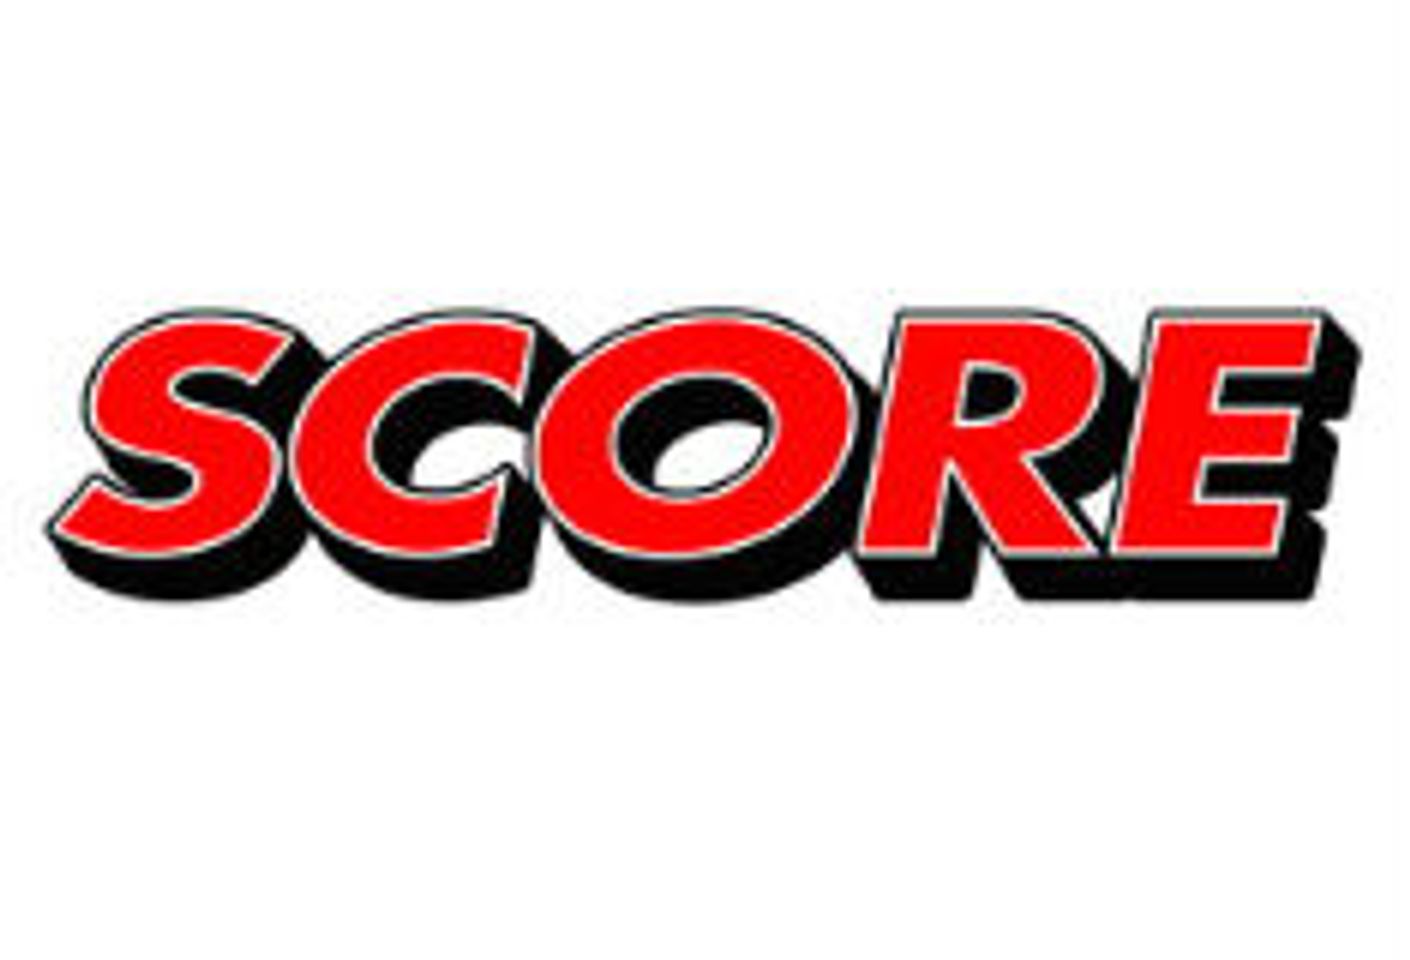 ScoreTV Holiday Edition Returns to Scoreland